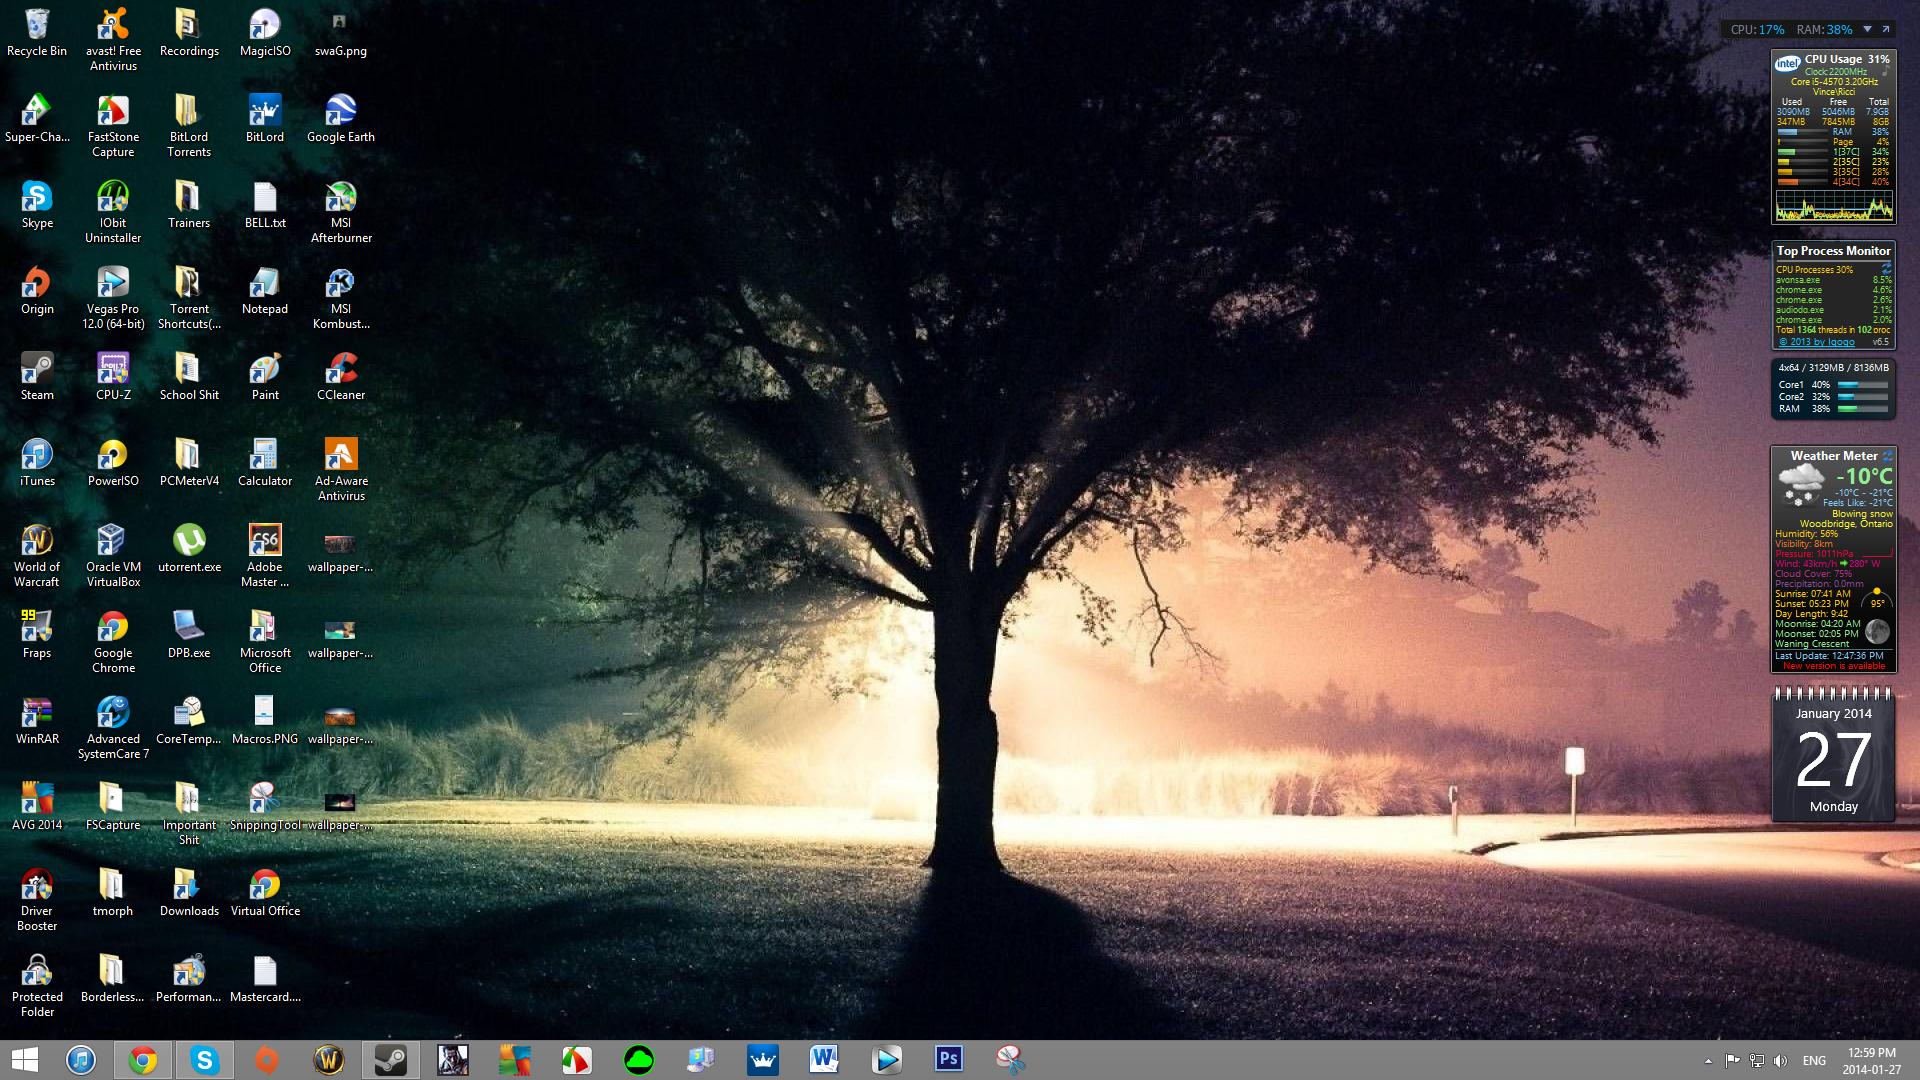 My Desktop Wallpaper is Blurry - WallpaperSafari